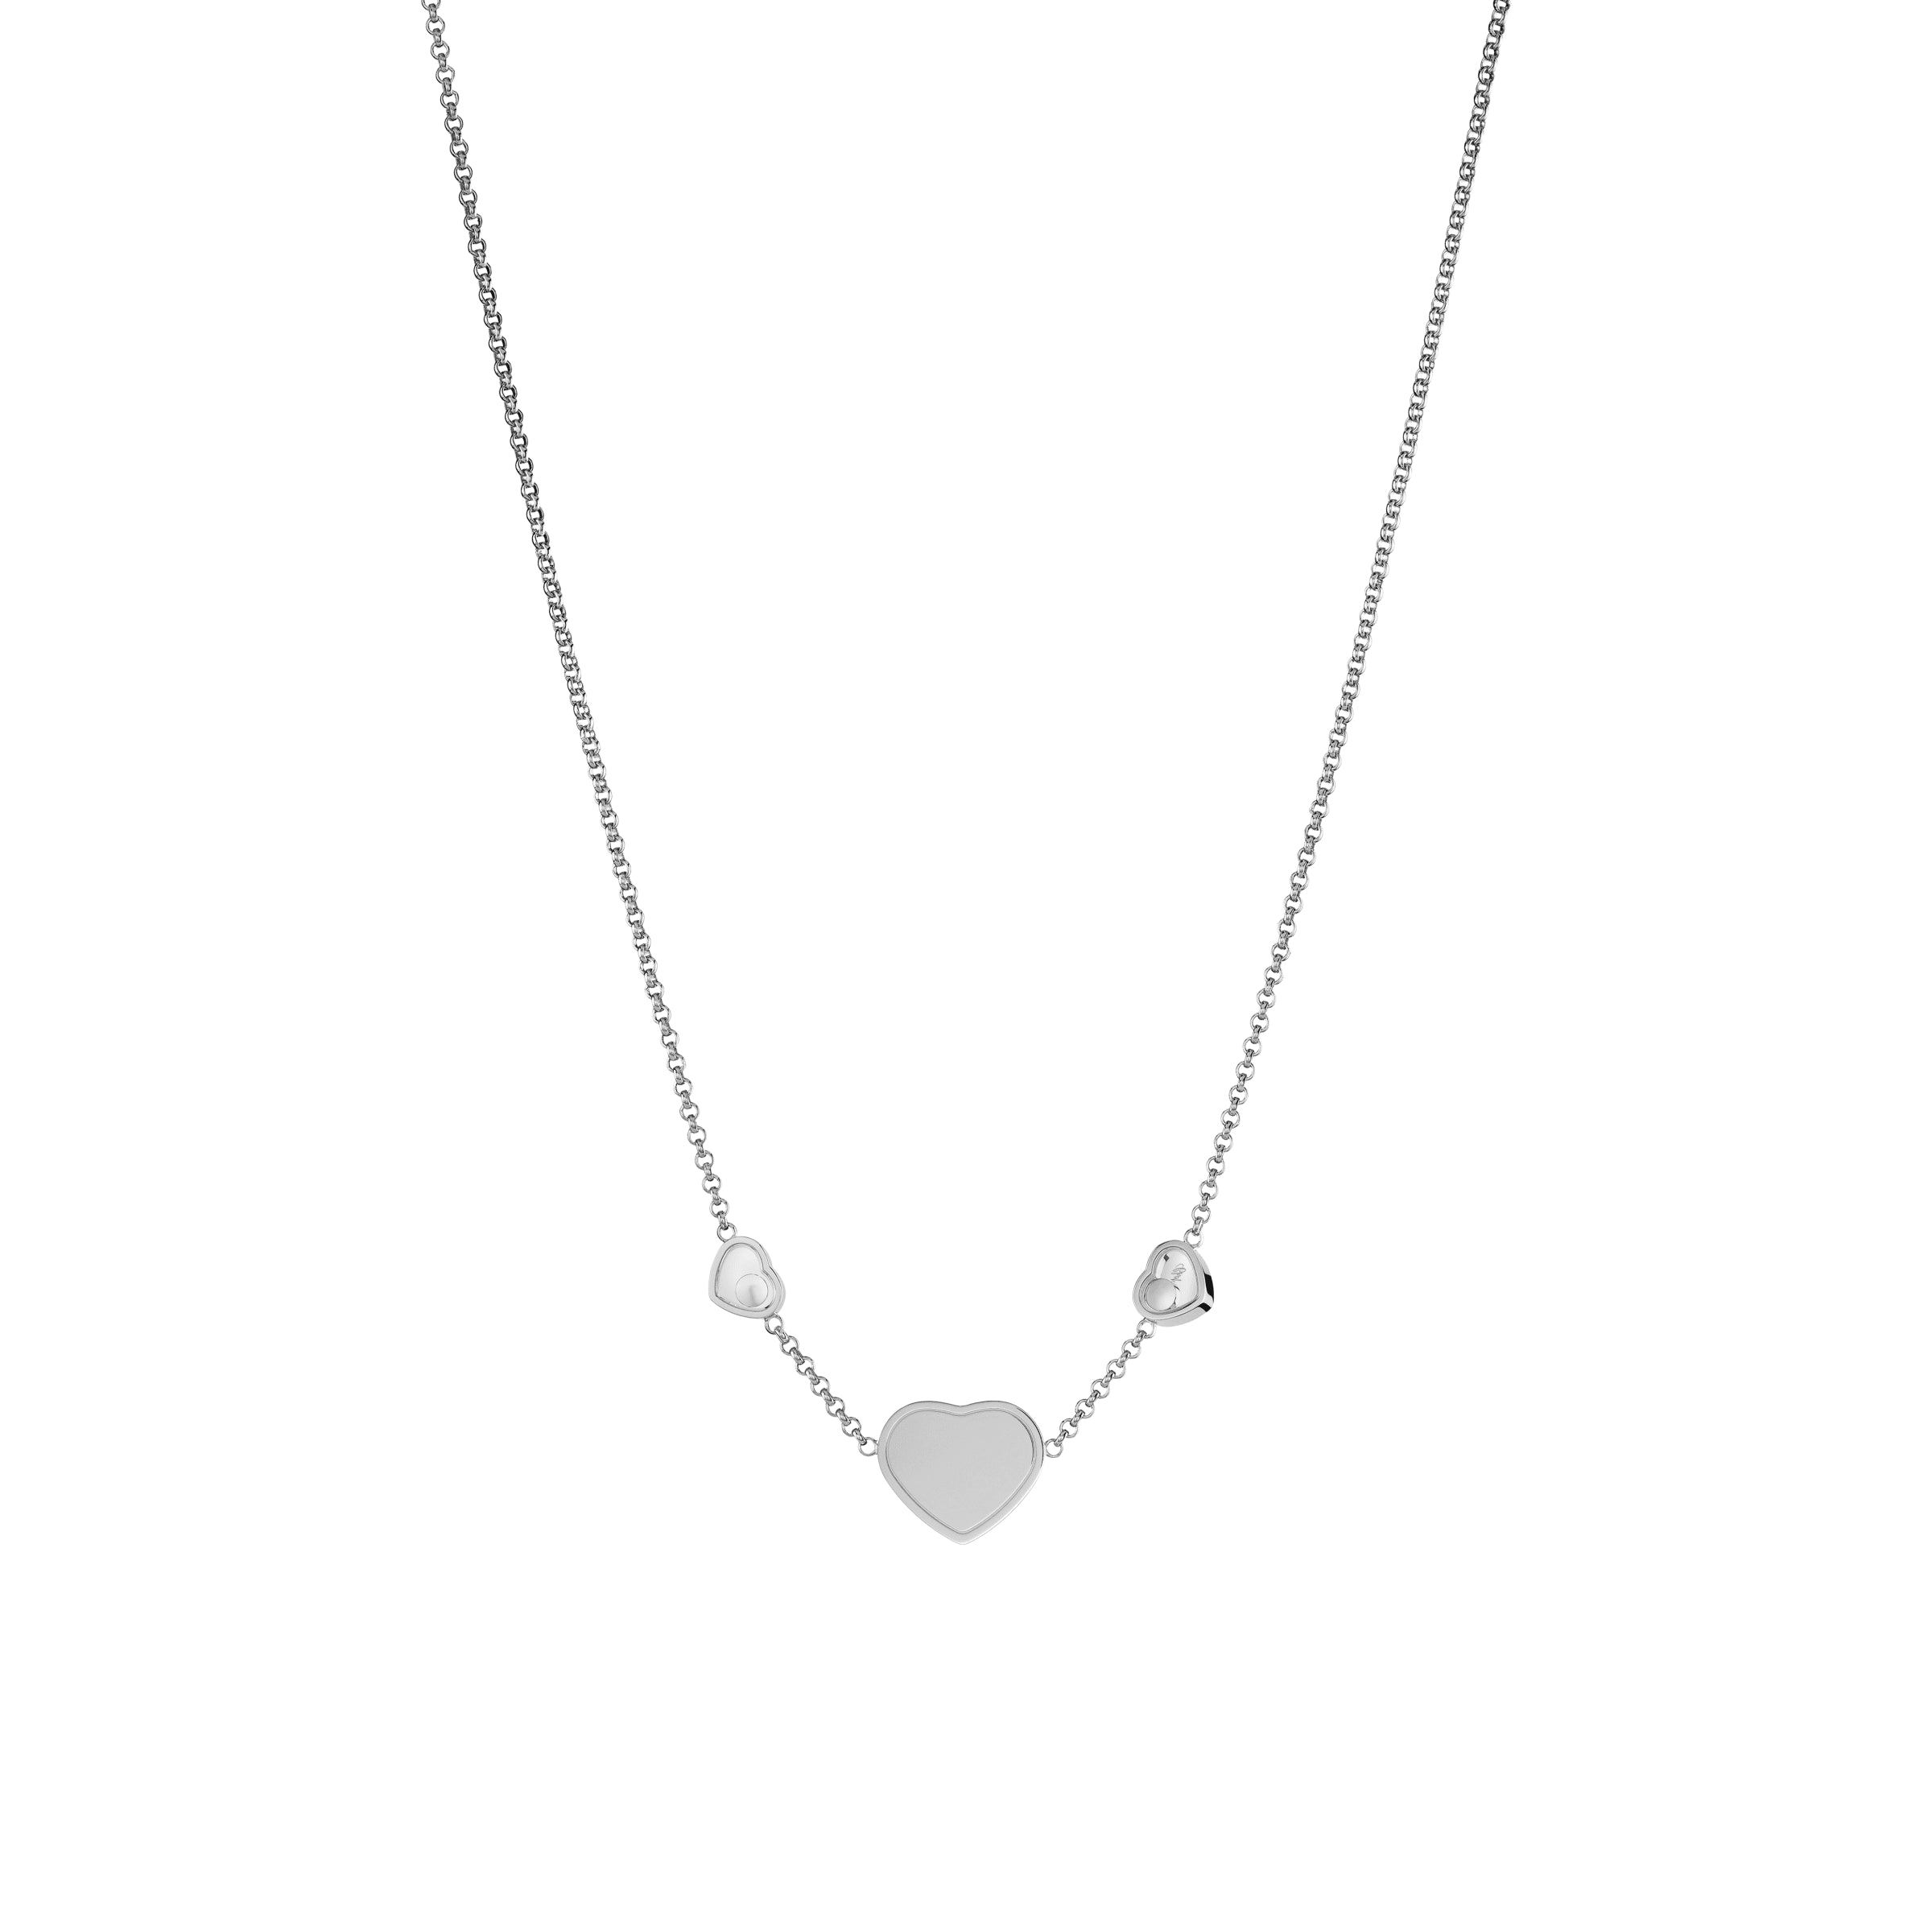  My Happy Hearts necklace4